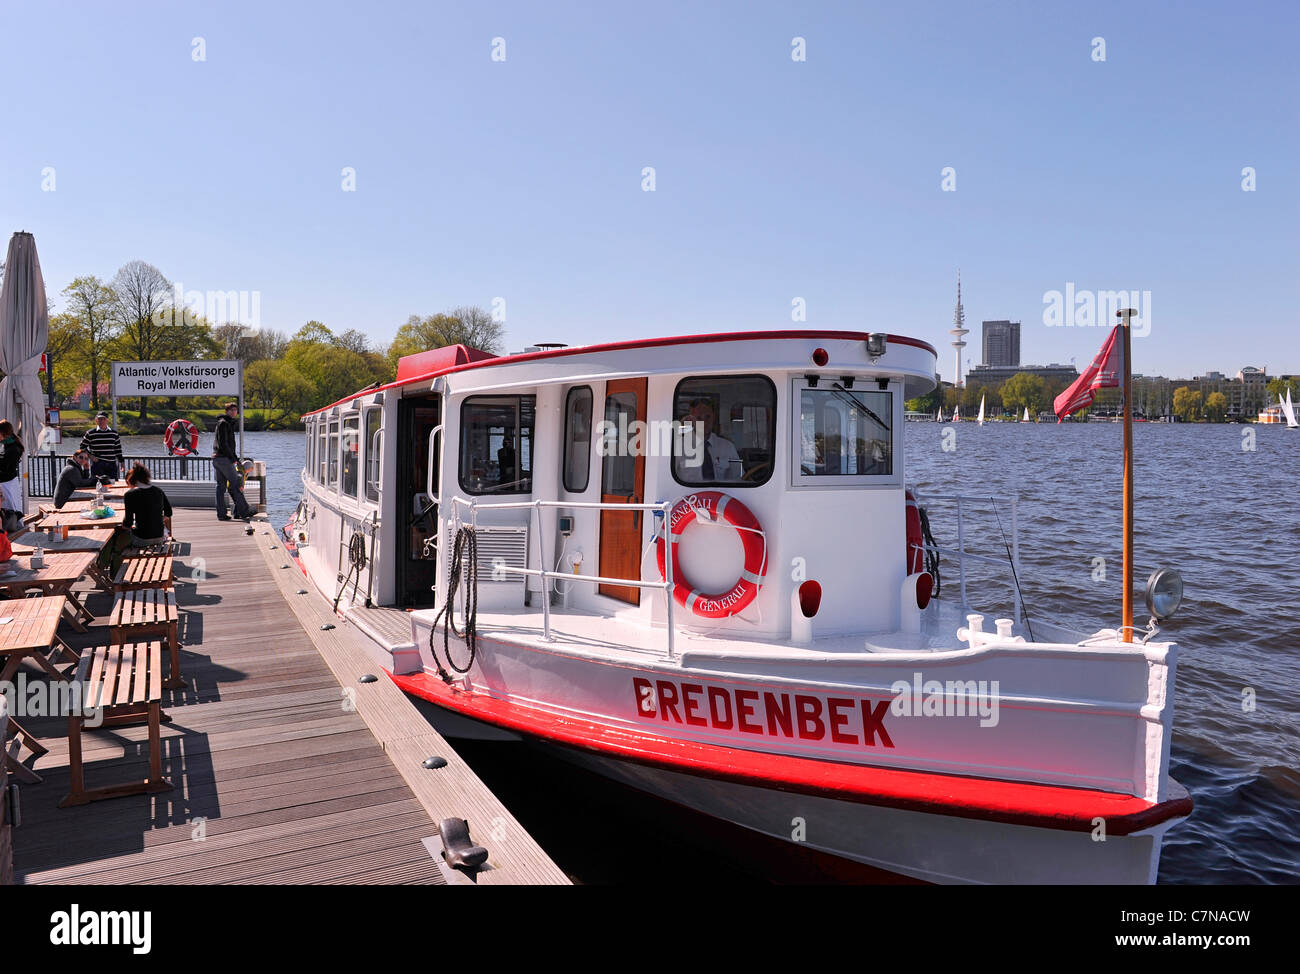 Alster lake ship BREDENBEK docking at the ATLANTIC landing, Aussenalster, Outer Alster lake, Hamburg, Germany, Europe Stock Photo